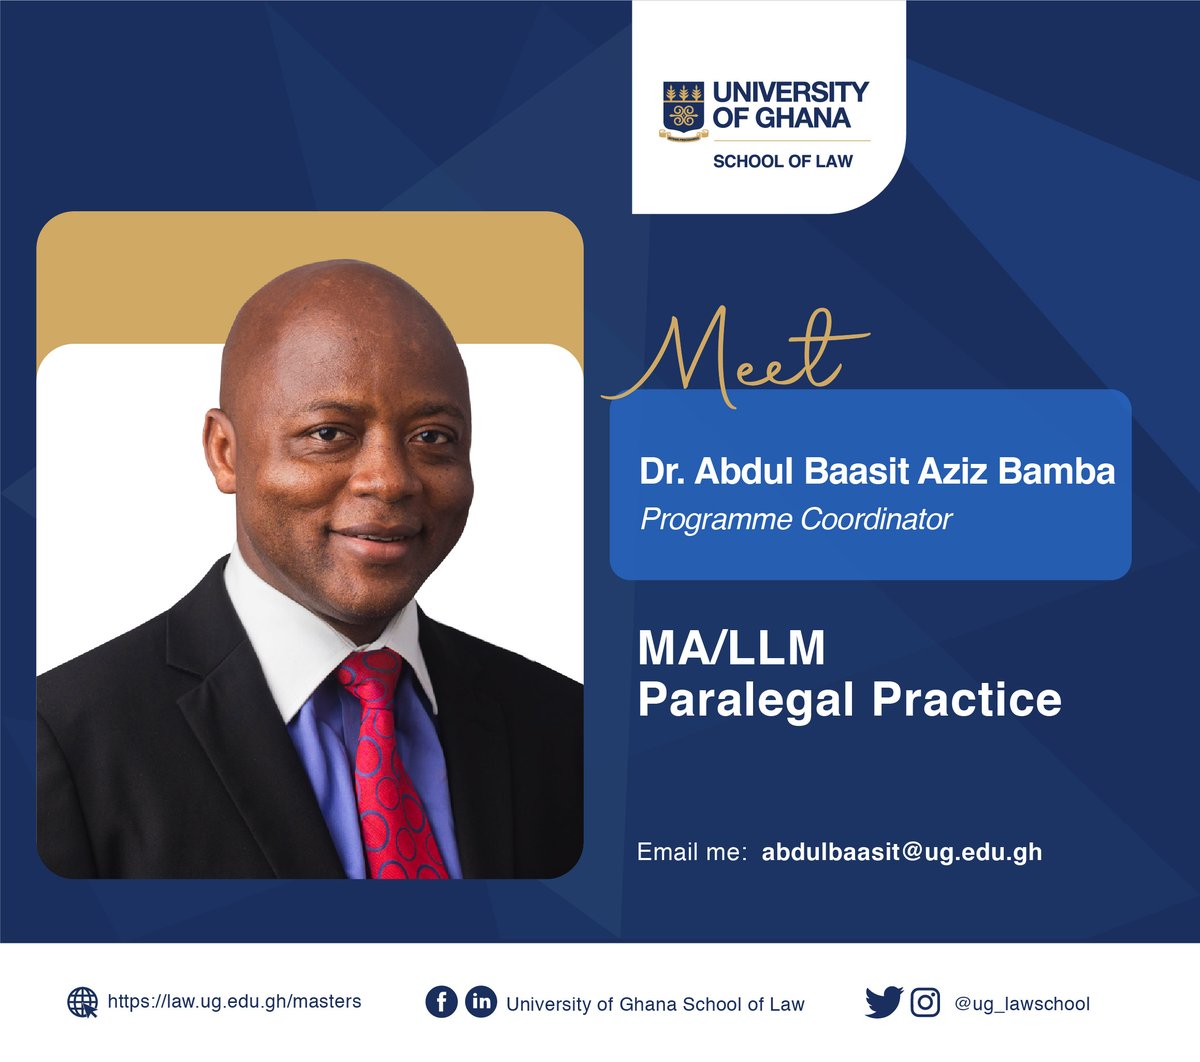 Meet the Coordinator for MA/LLM Paralegal Practice, Dr. Abdul Baasit Aziz Bamba. 

#programmecoordinator  #lawpractice #RiskManagement #legalresearch 
 #BusinessDevelopment